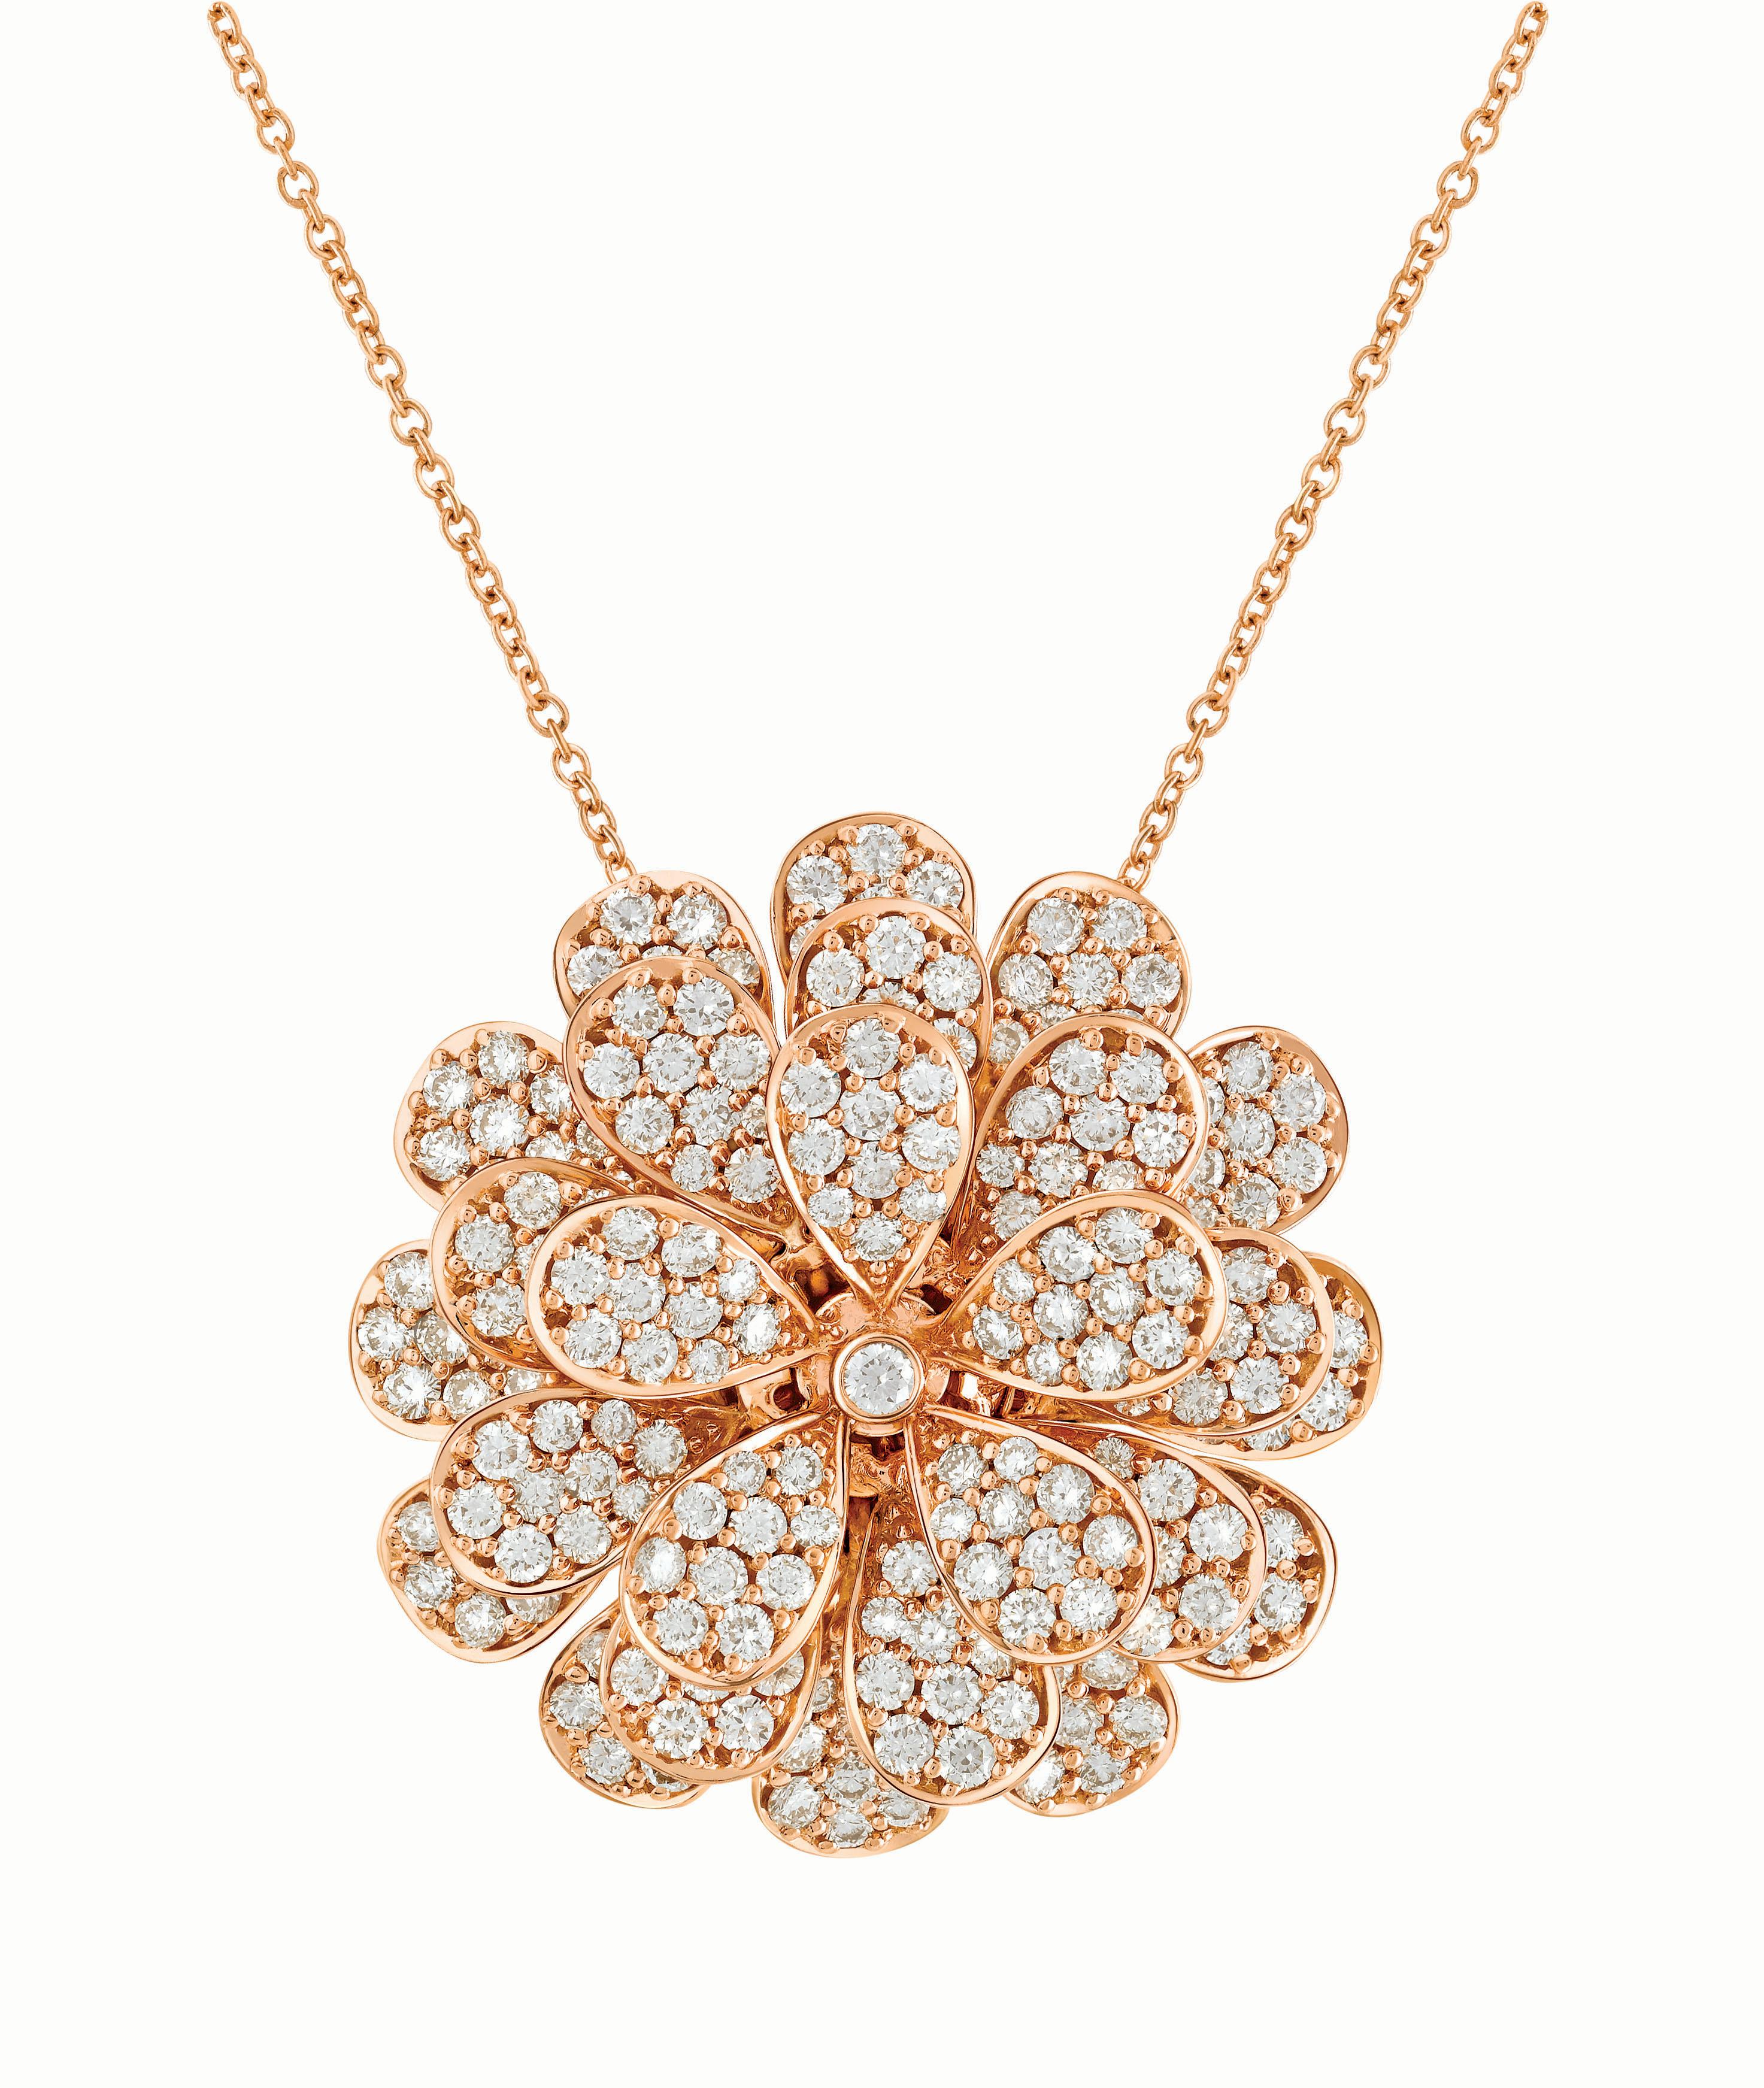 Women's 18 Karat Secret Garden Pink Gold Necklace With Vs-Gh Diamonds For Sale